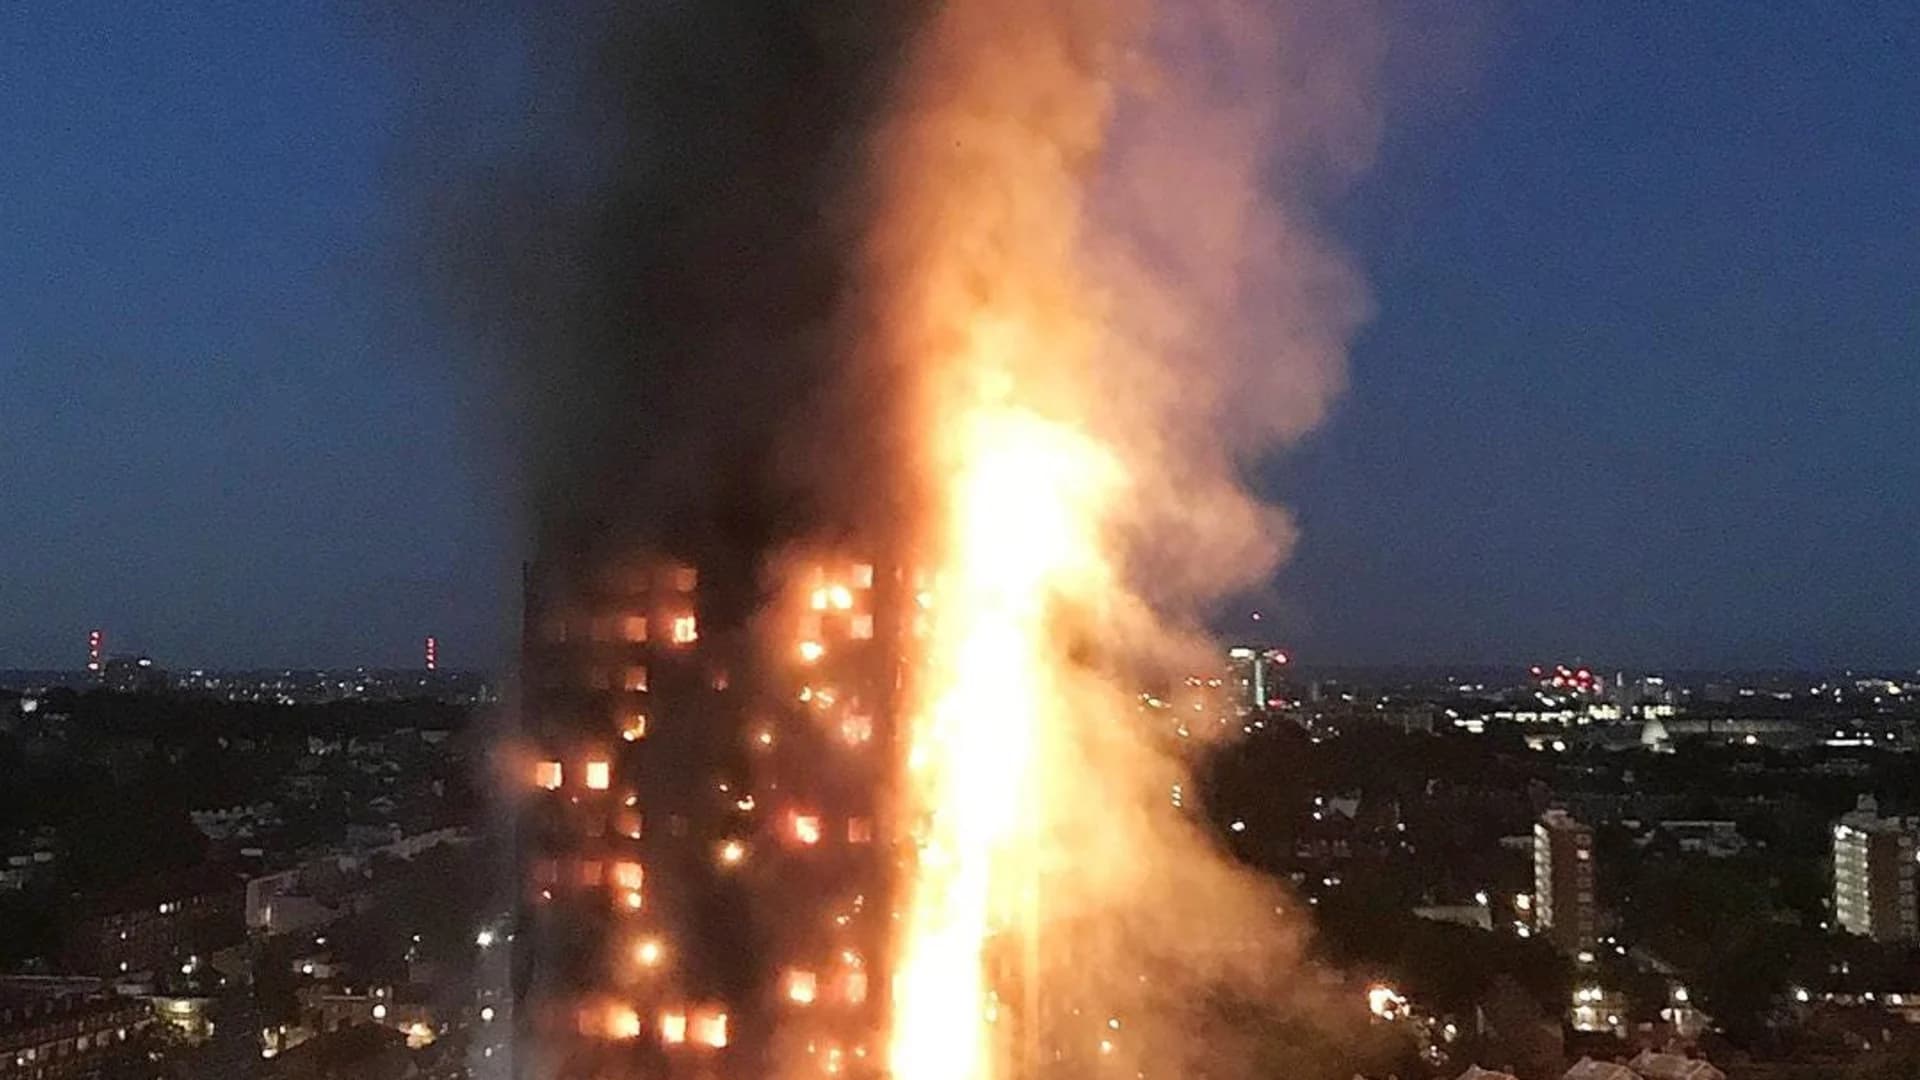 Grenfell Tower Fire in London